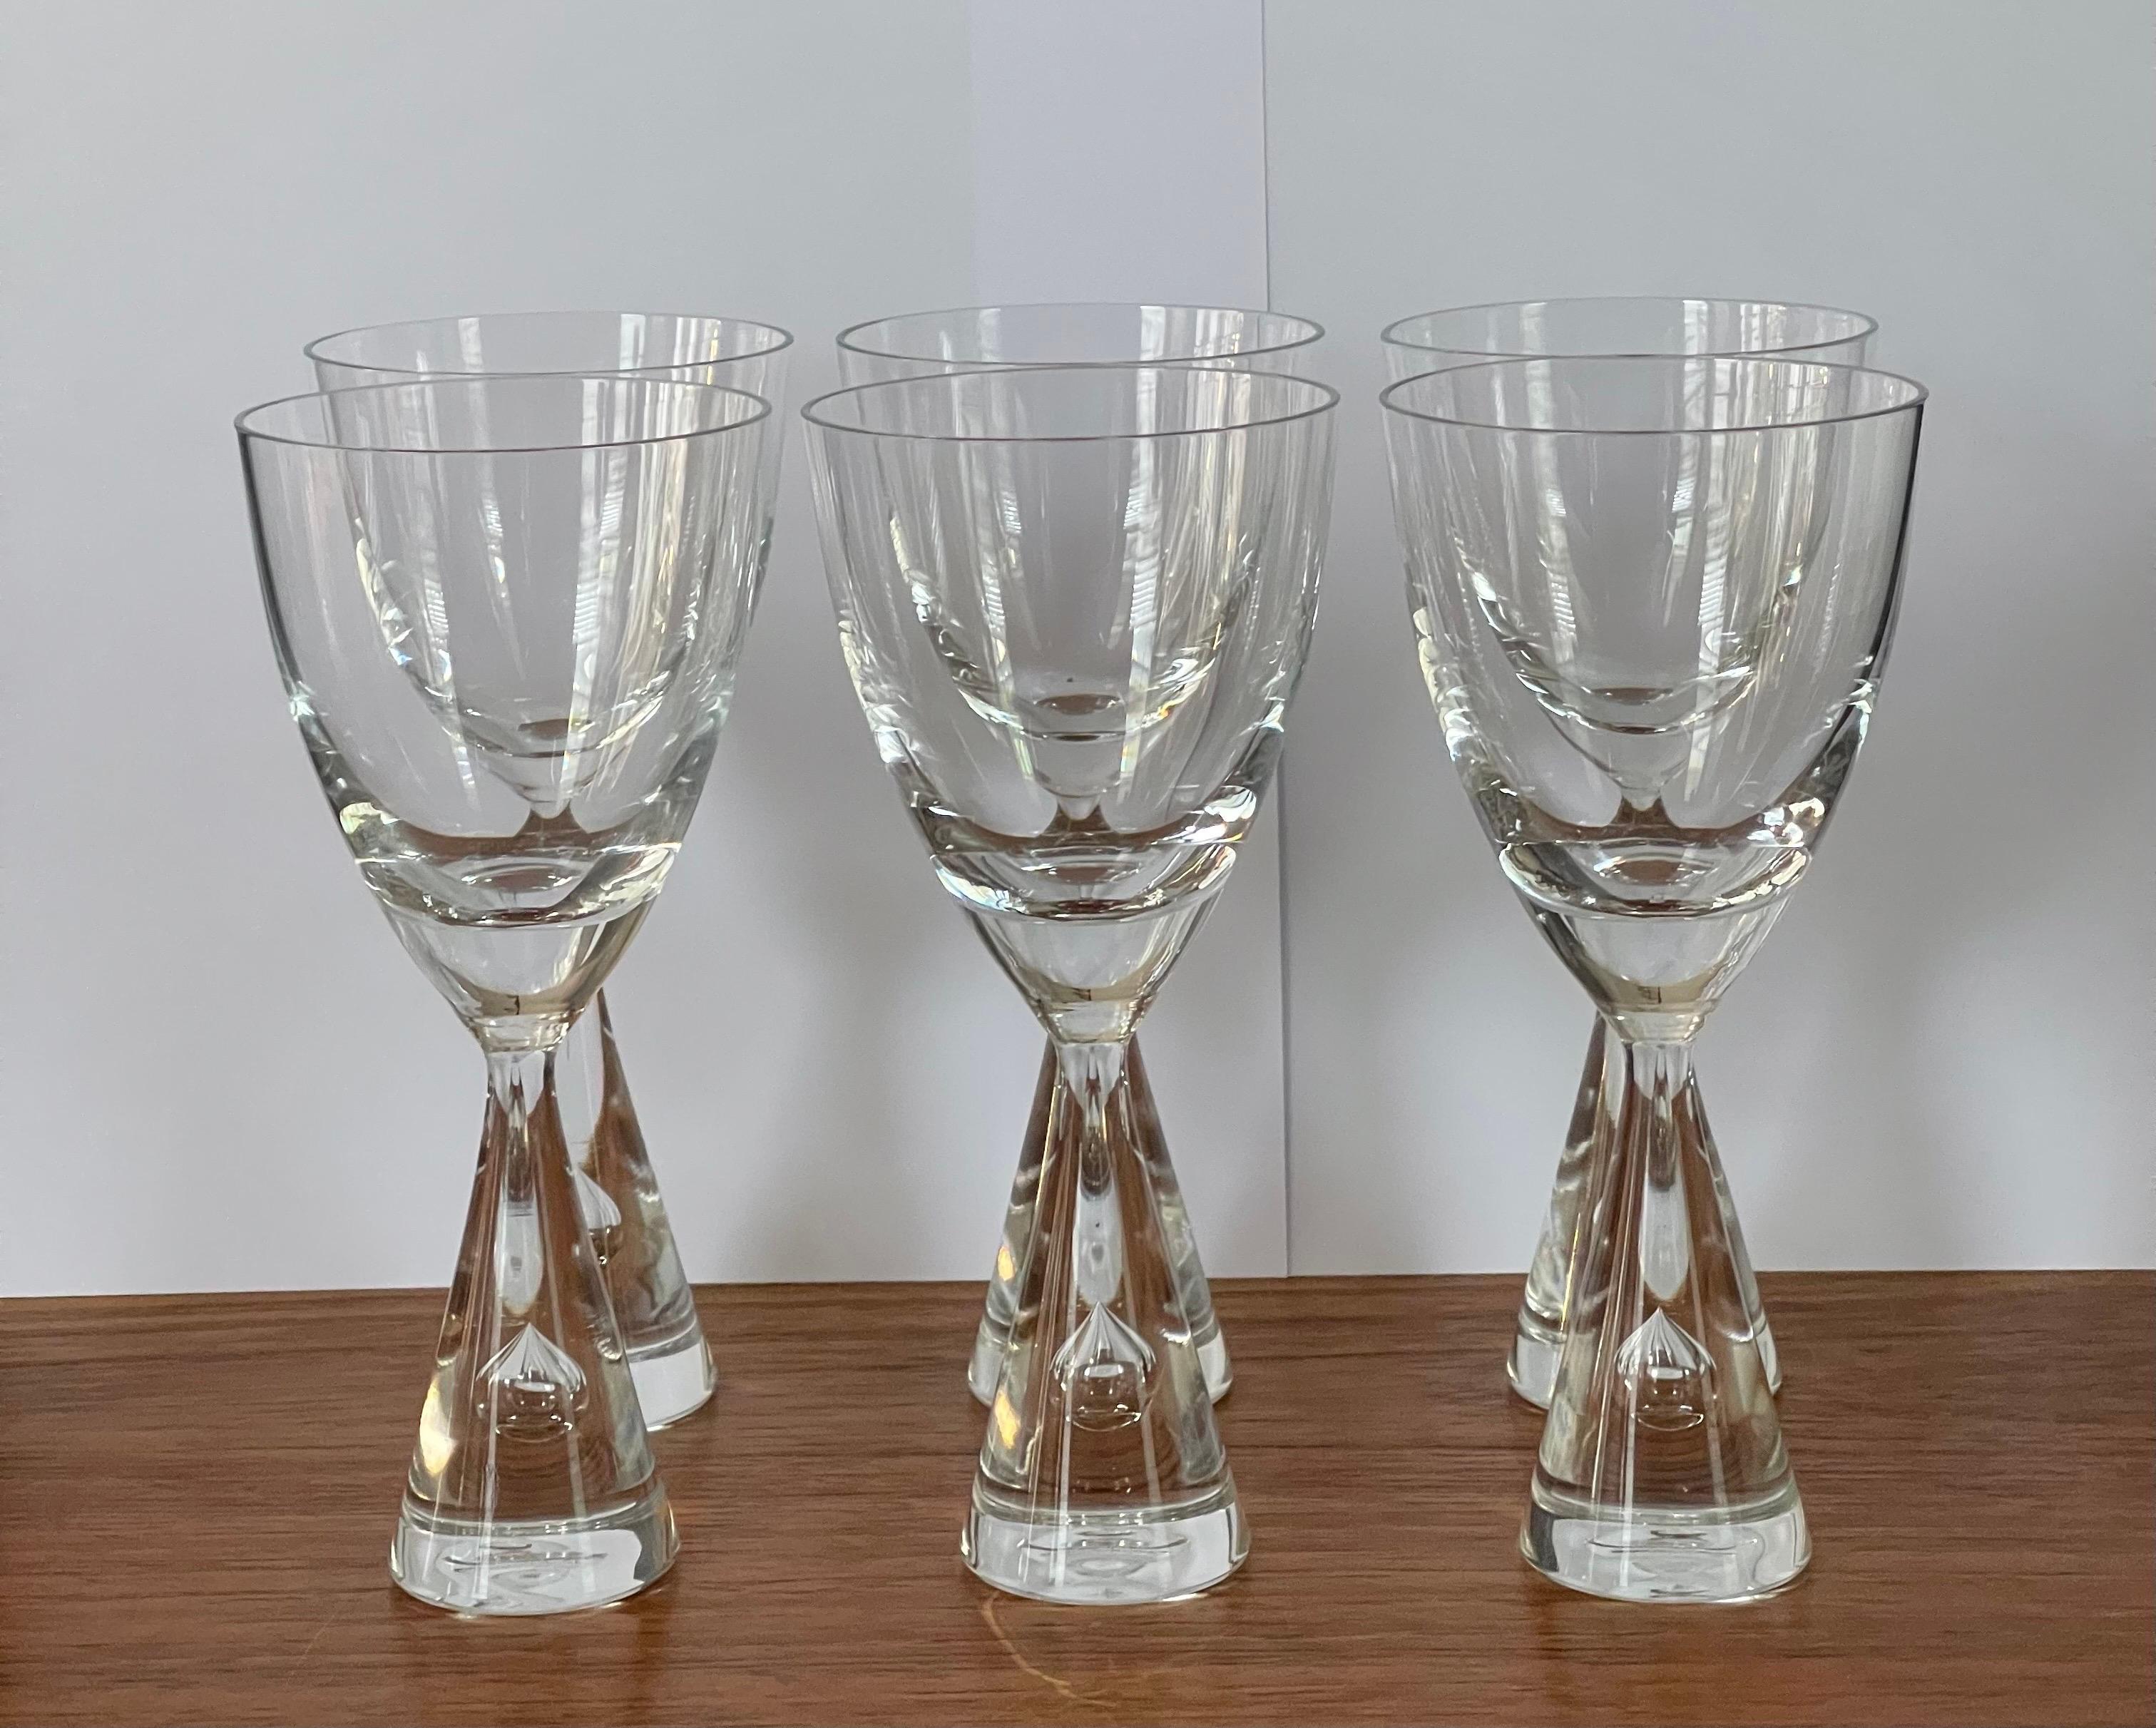 aphorism wine glasses set of 4